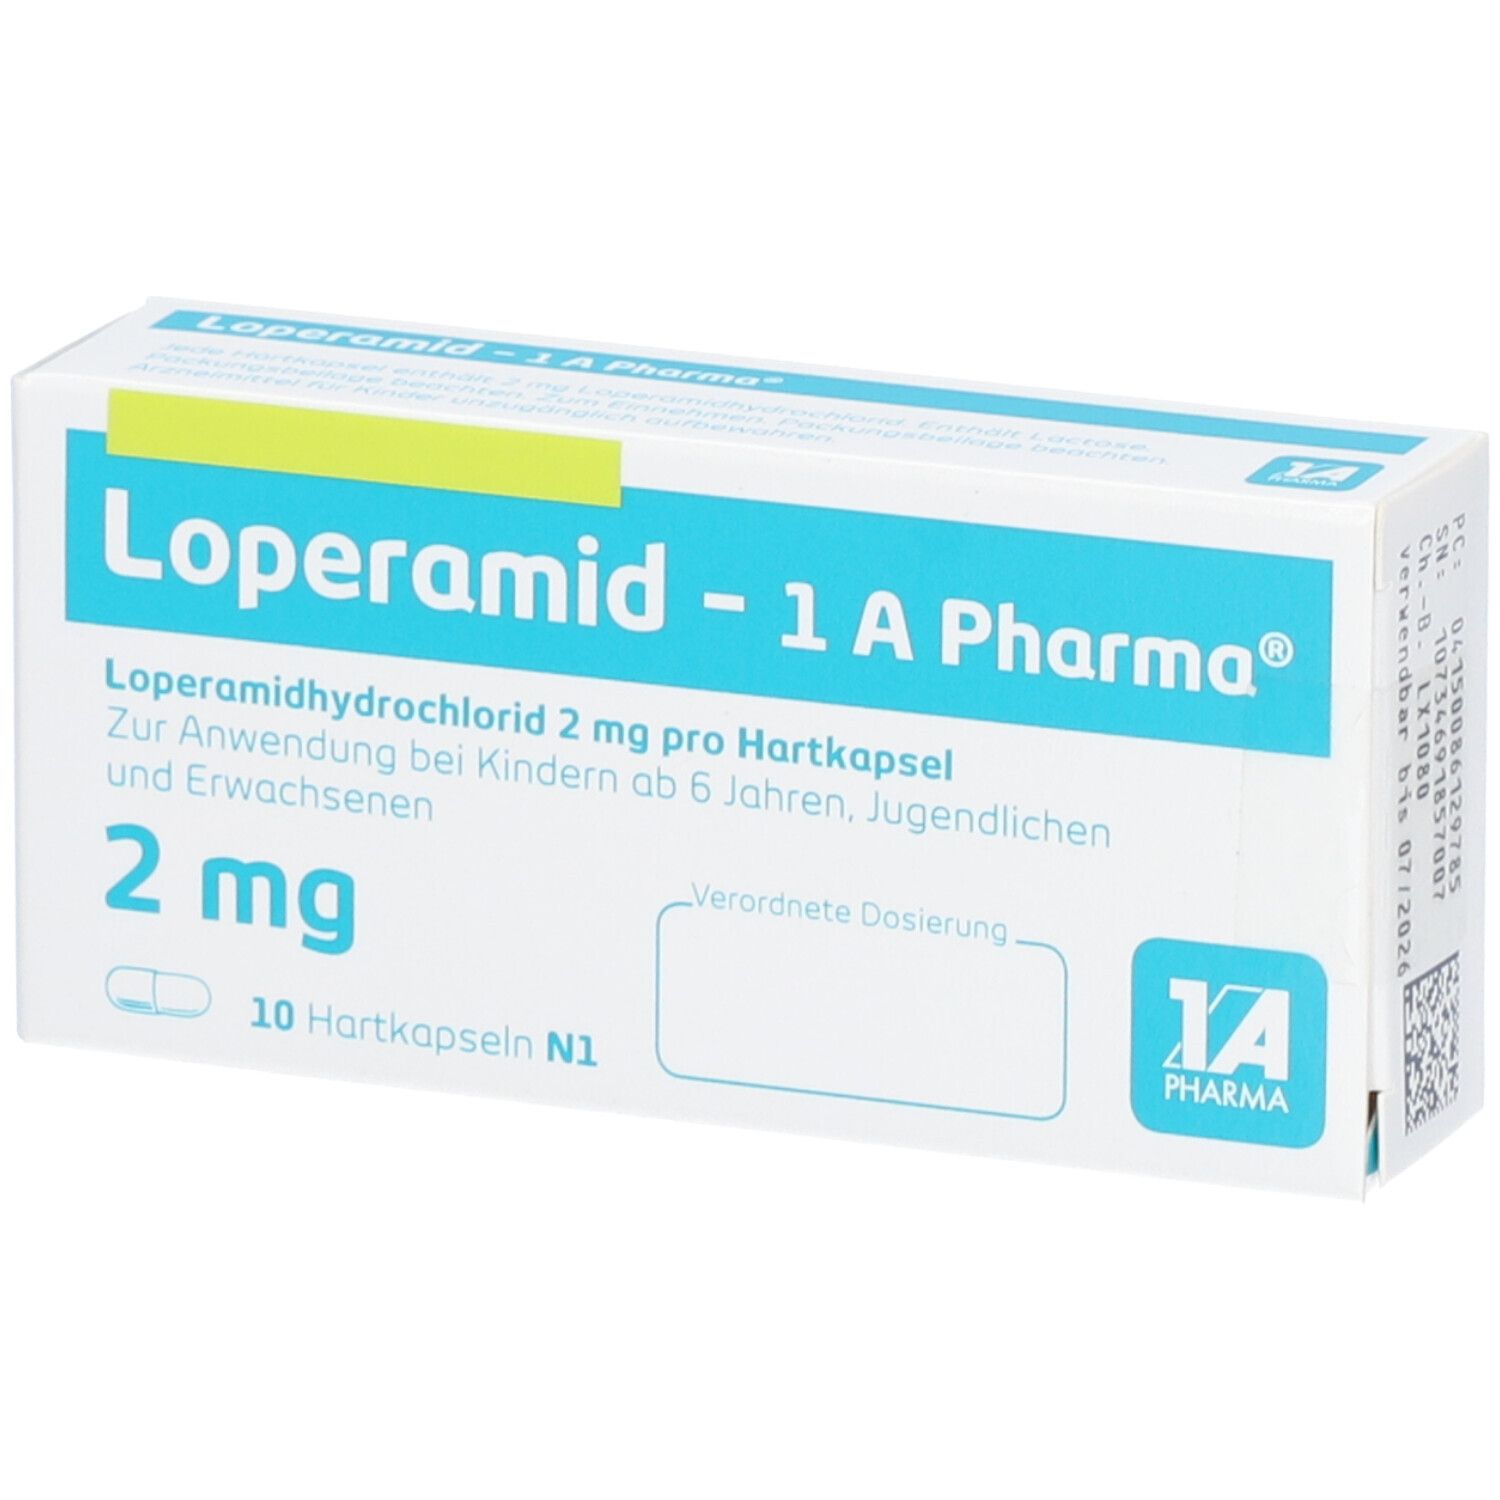 Loperamid 1A Pharma®